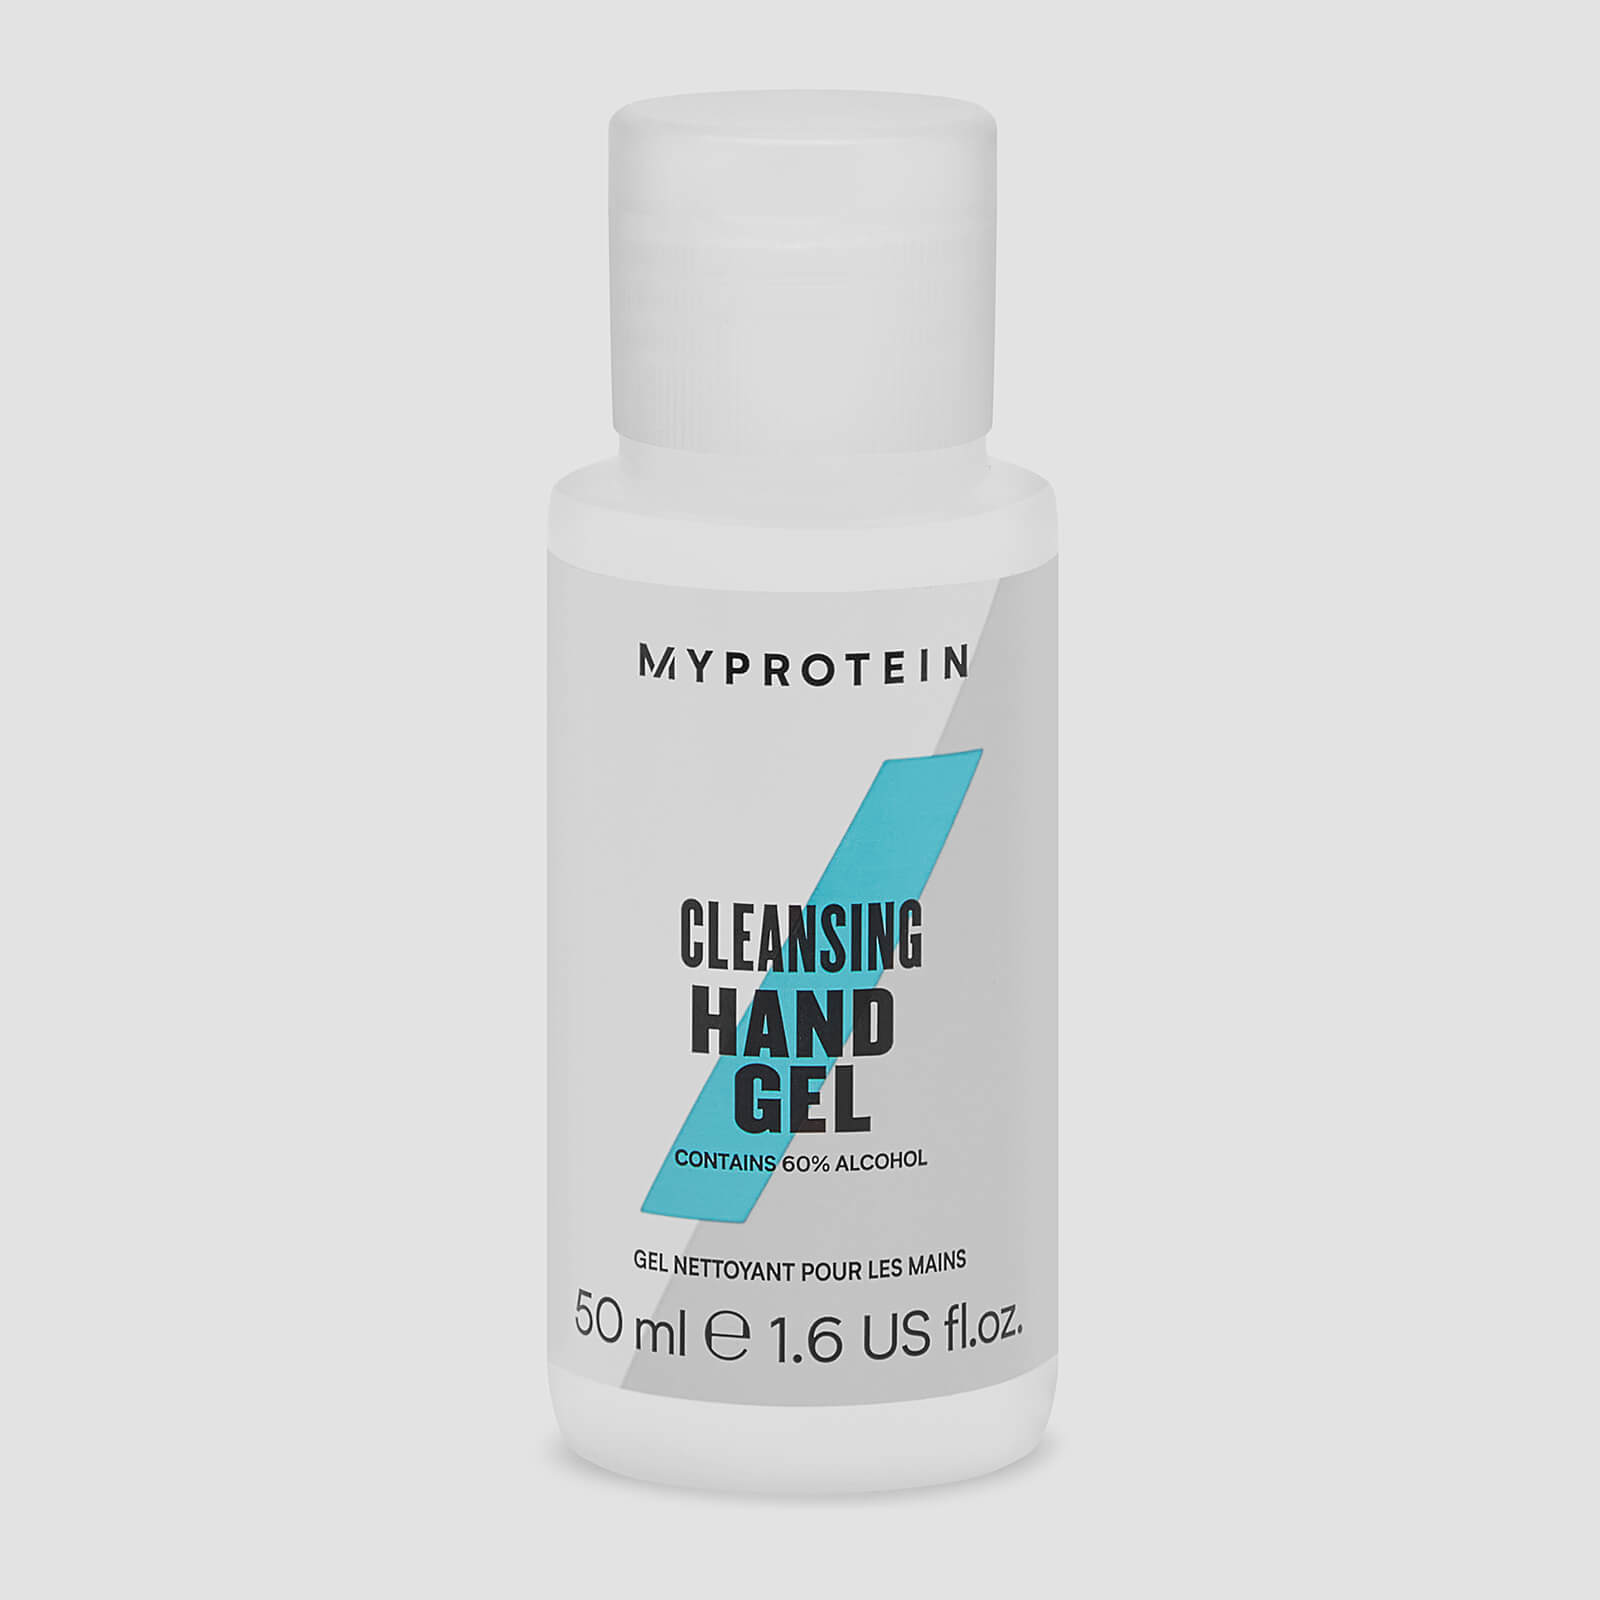 Cleansing hand Gel. Gel nettoyant mains Extra Pur hand Cleaning Gel. Hand Gel. Купить гели с доставкой